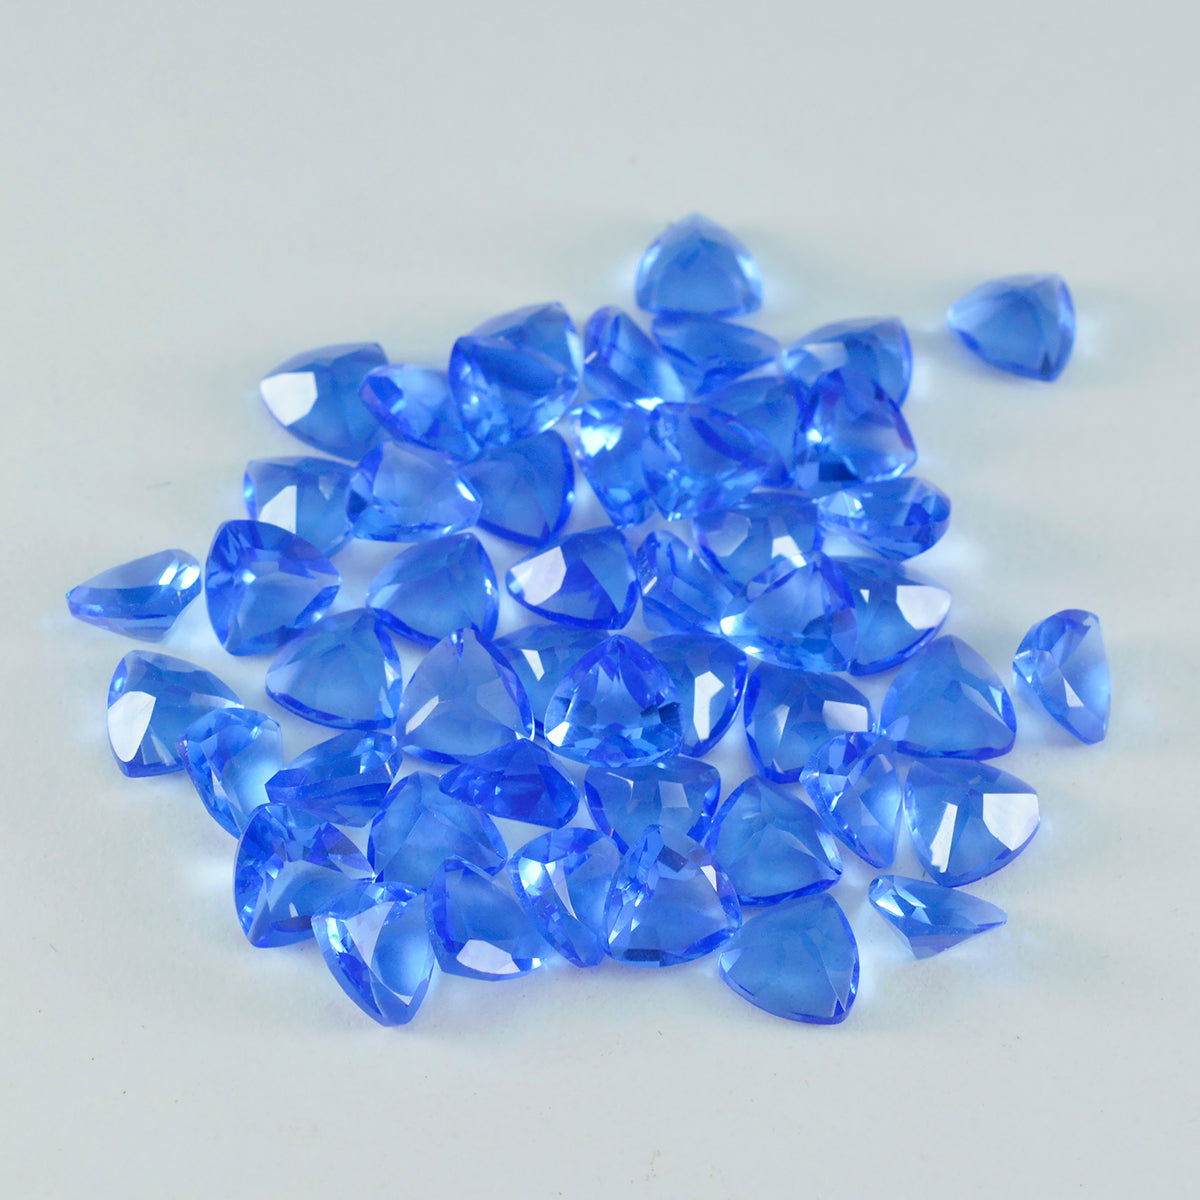 Riyogems 1PC Blue Sapphire CZ Faceted 8x8 mm Trillion Shape wonderful Quality Loose Gemstone